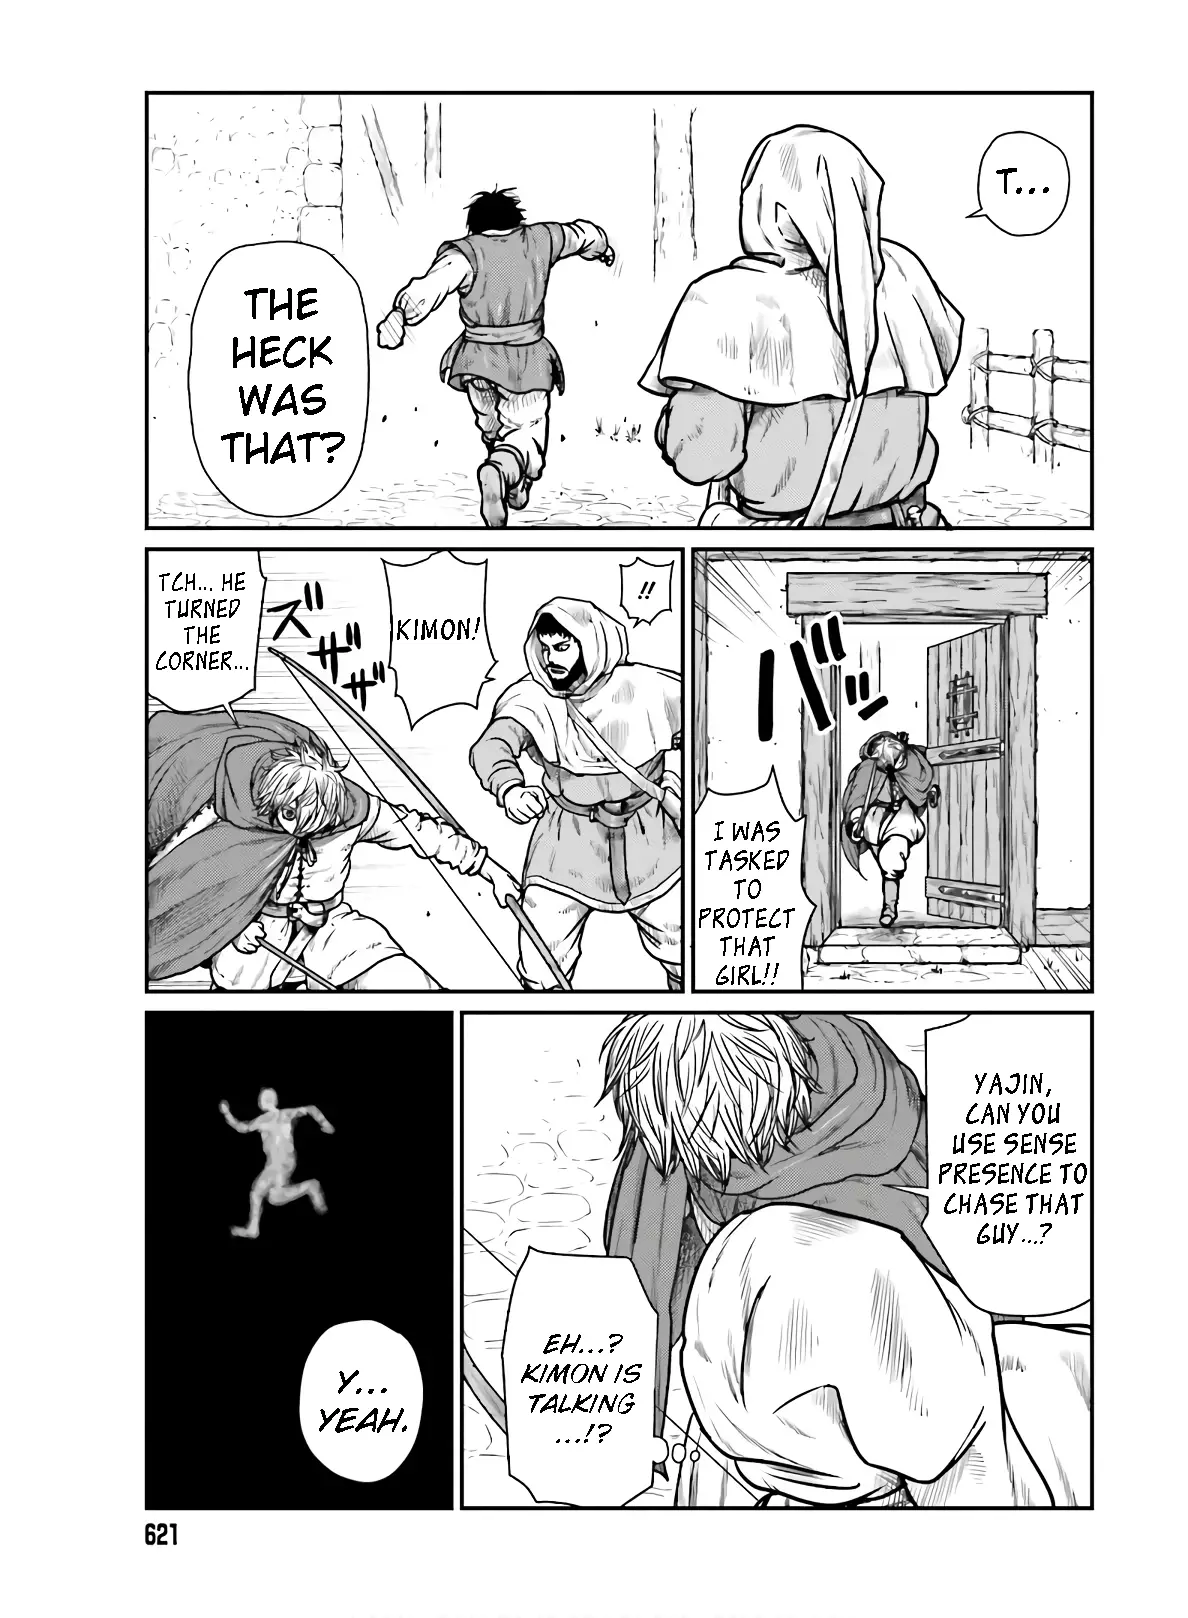 Yajin Tensei: Karate Survivor In Another World - 16 page 11